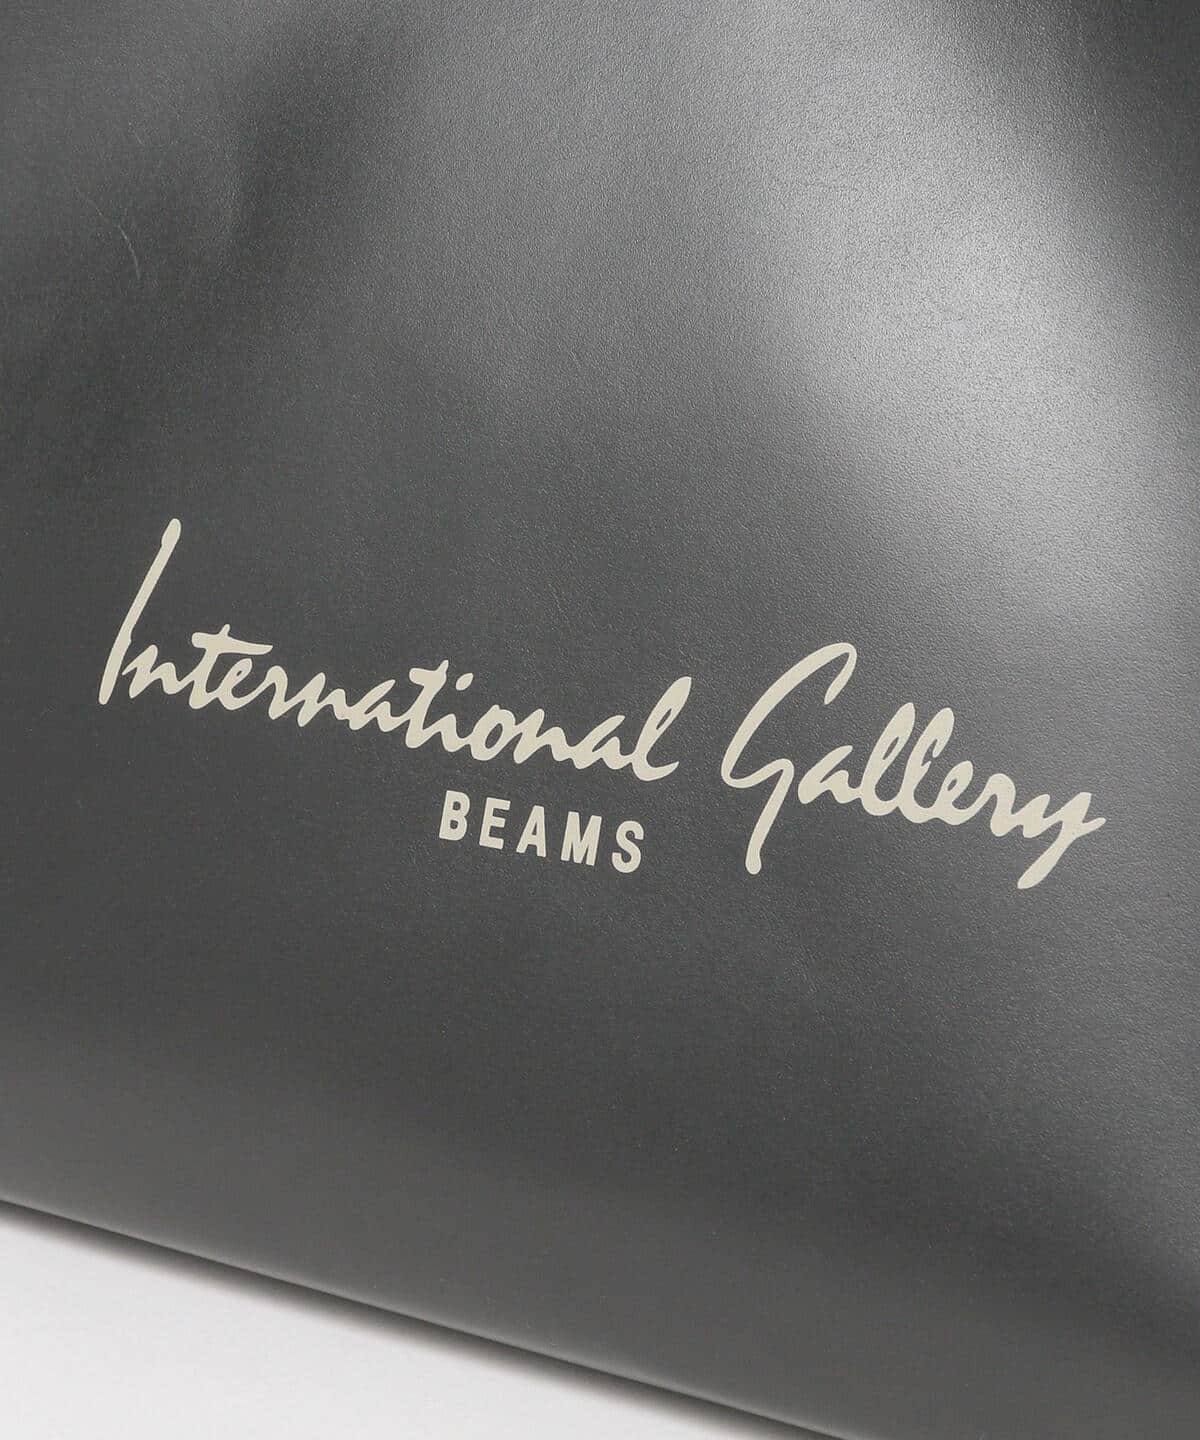 International Gallery BEAMS（インターナショナルギャラリー ビームス